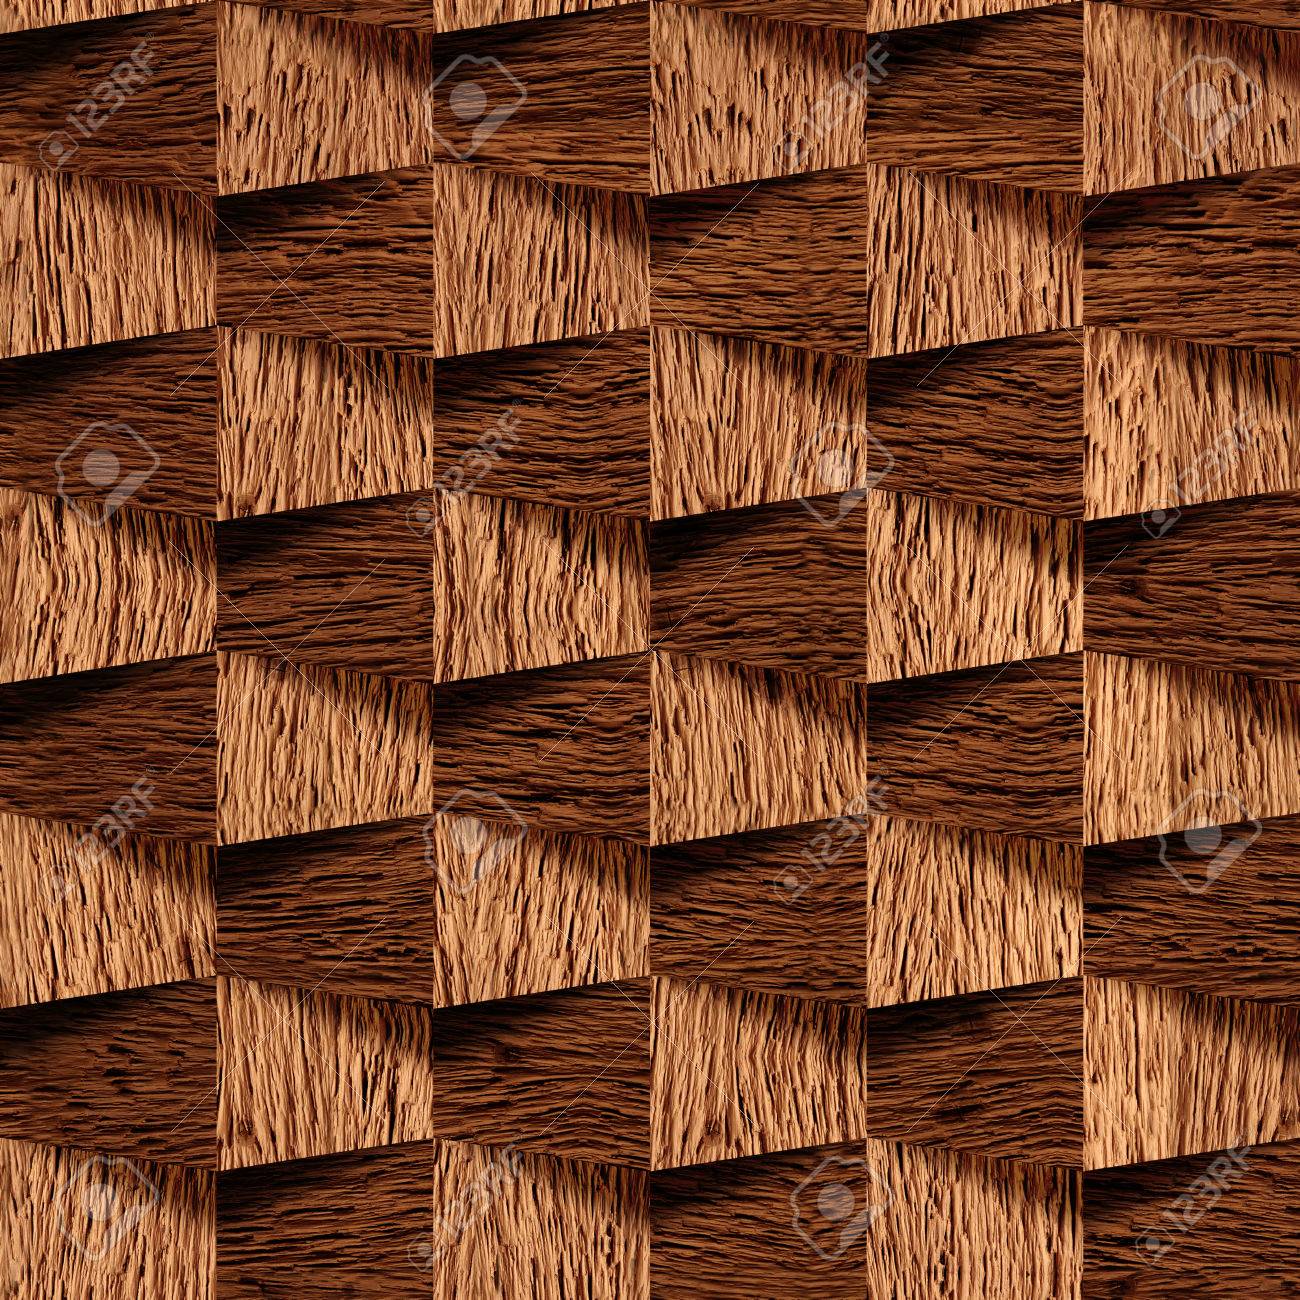 Wall Of The Brick Wooden Wallpaper Decorative Texture